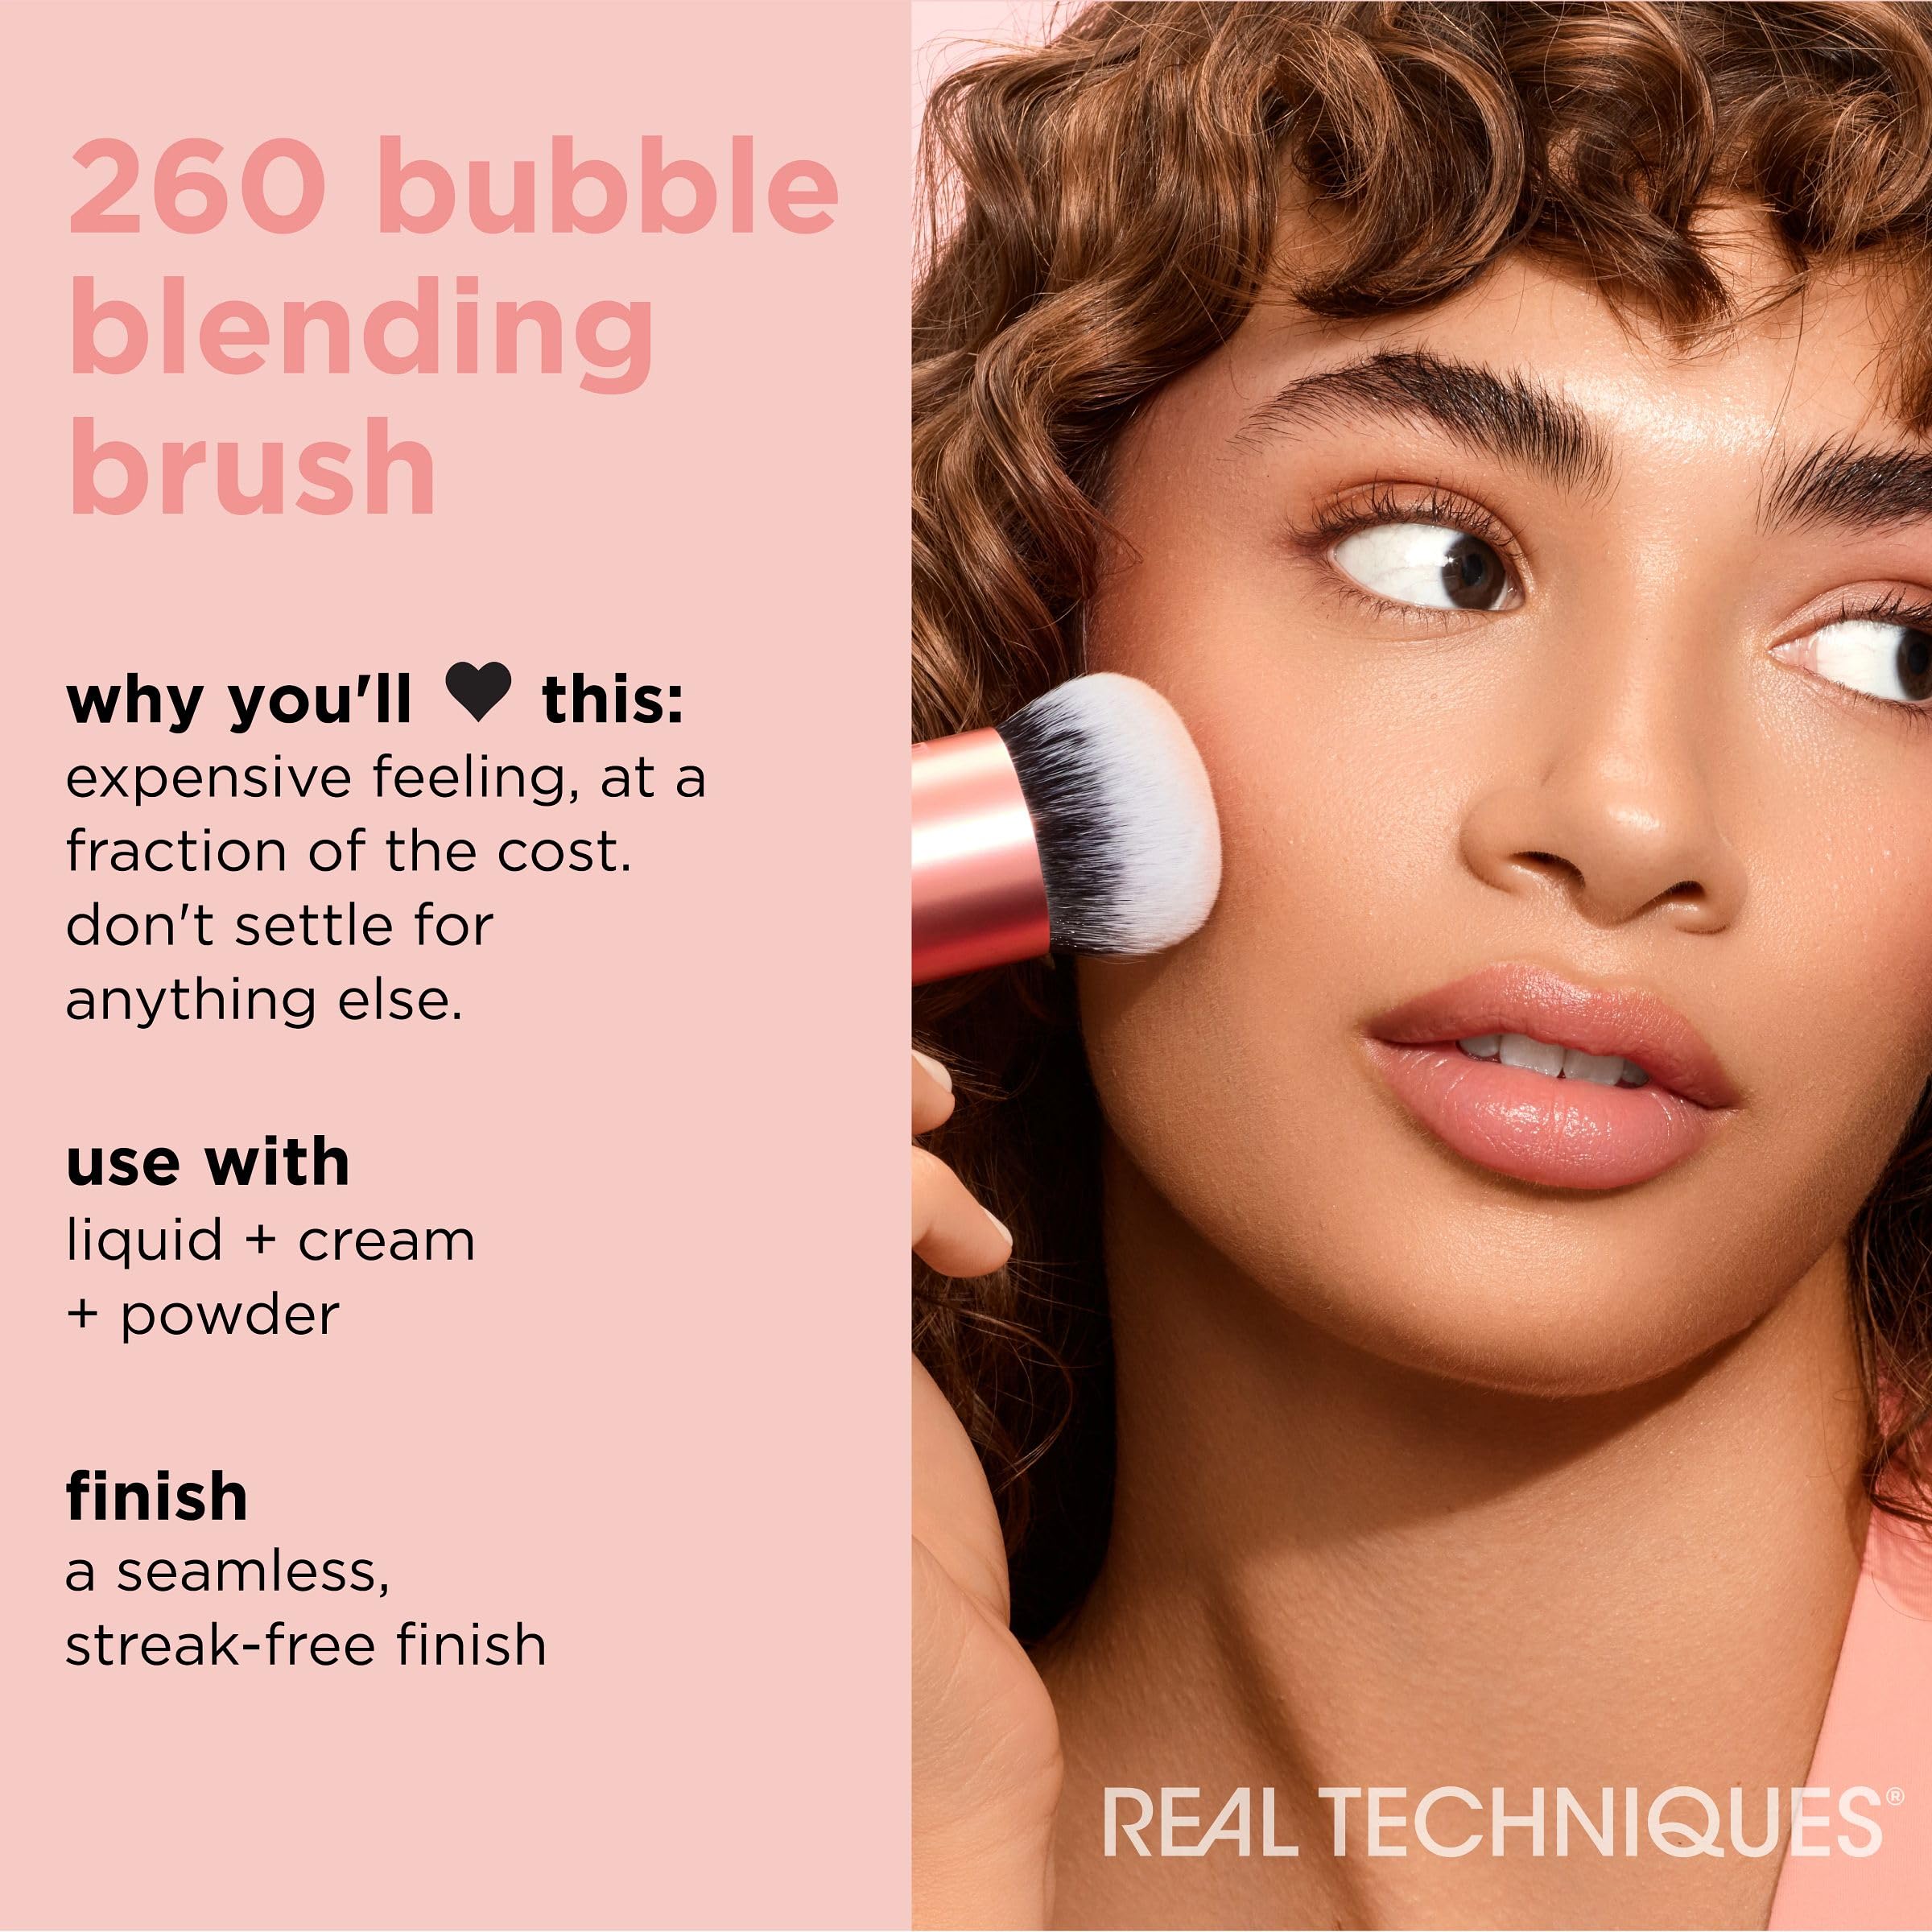 Real Techniques Bubble Blending Makeup Brush, Multipurpose Face Brush For Liquid, Cream, & Powder Prouducts, Unique Bubble Brush Head, Synthetic Bristles, Vegan & Cruelty Free, 1 Count